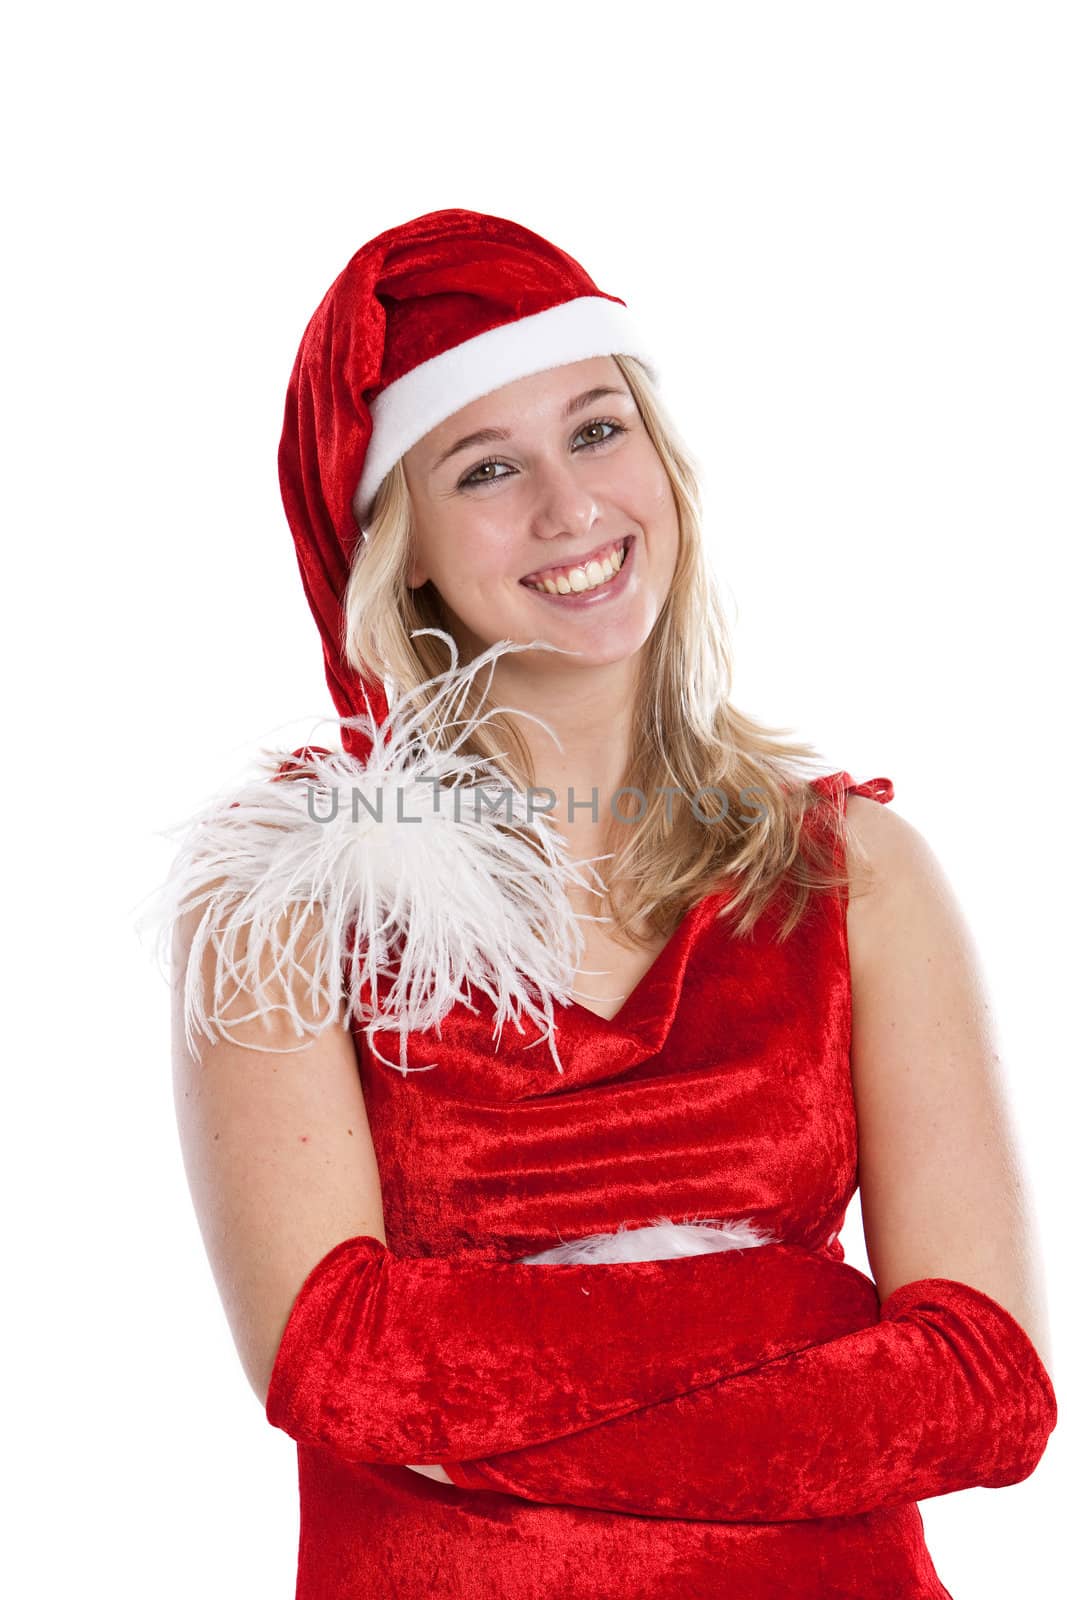 Beautiful woman smiling in santa outfit